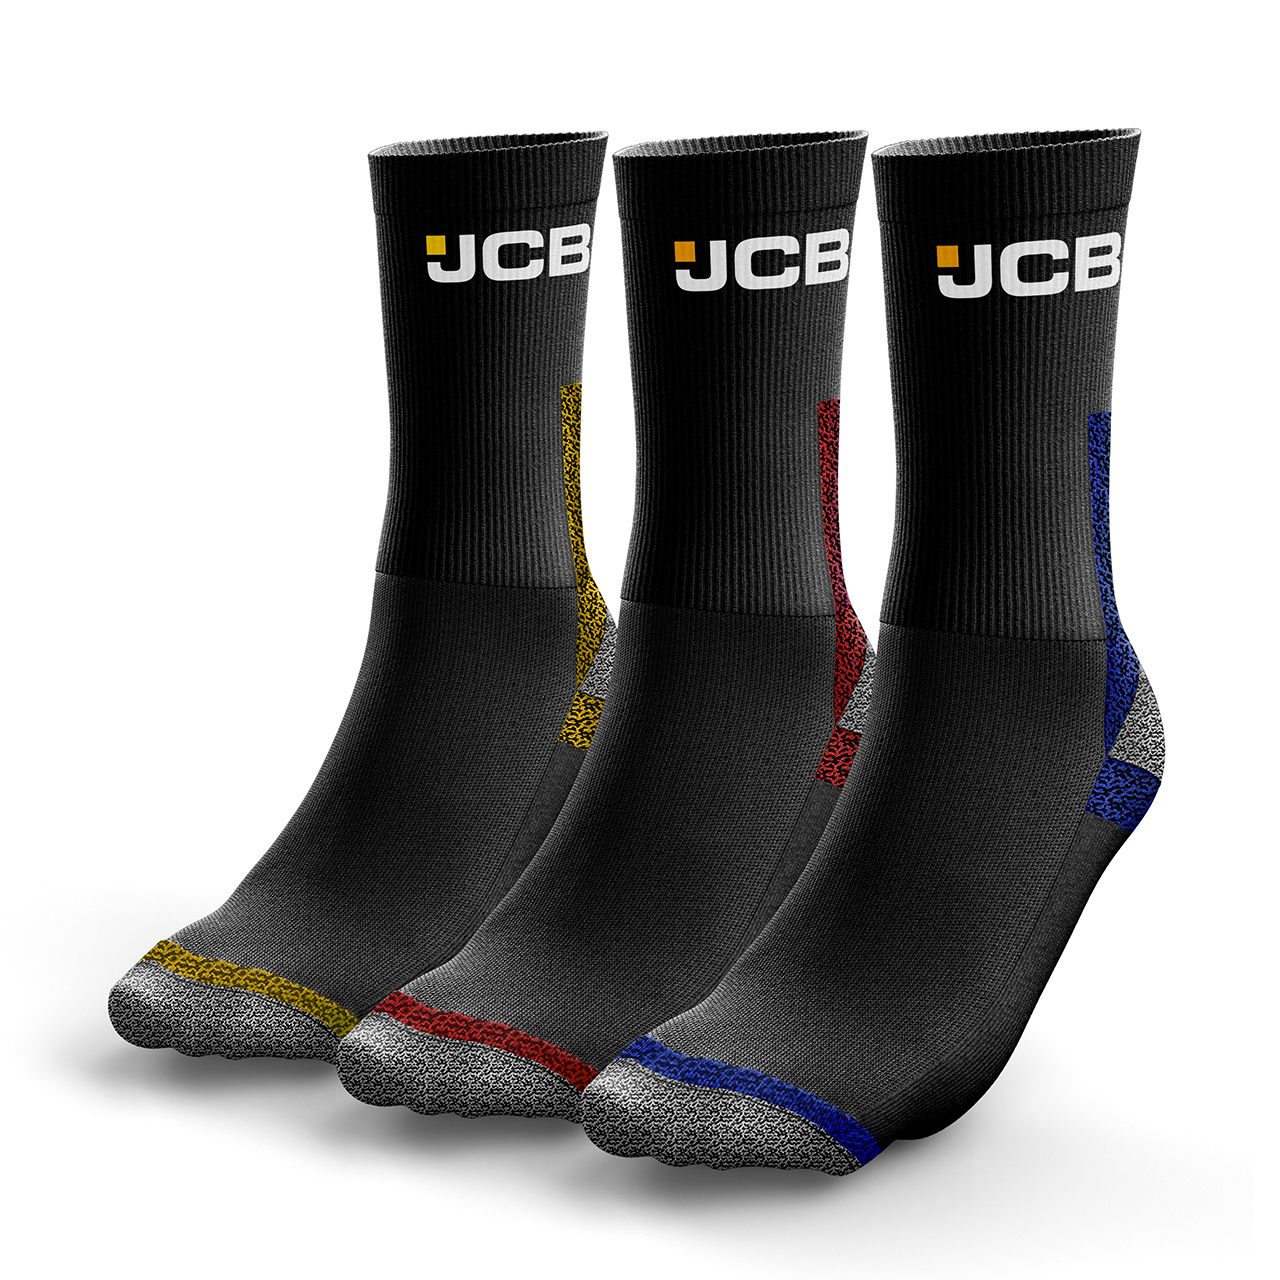 JCB Crew Work Socks - 3 pairs